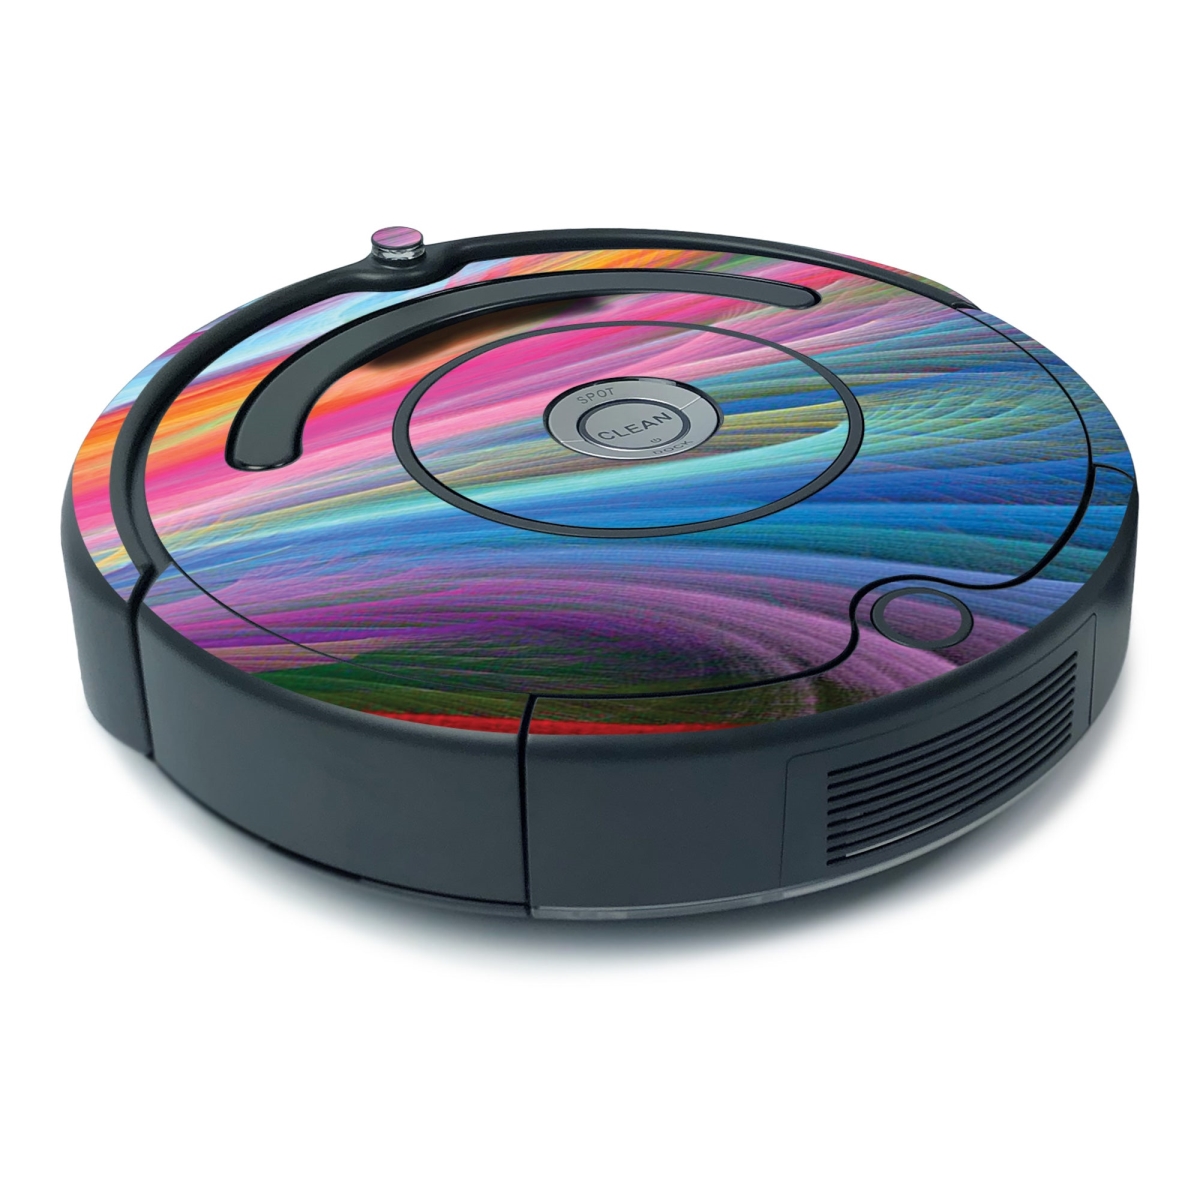 Picture of MightySkins IRRO675MIN-Rainbow Waves Skin for iRobot Roomba 675 Minimal Coverage - Rainbow Waves